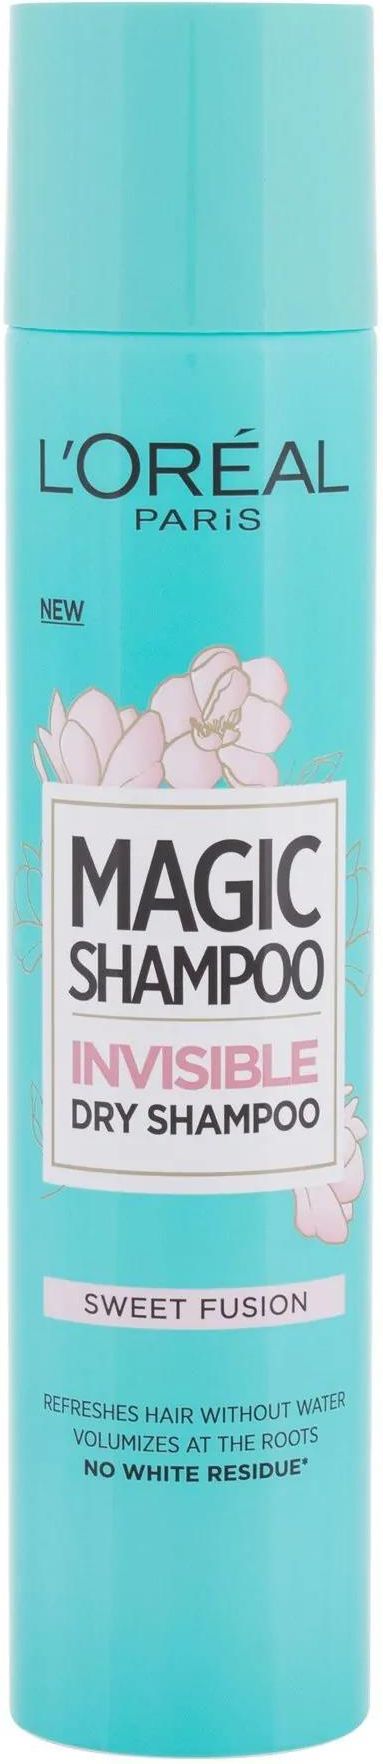 suchy szampon loreal magic wizaz